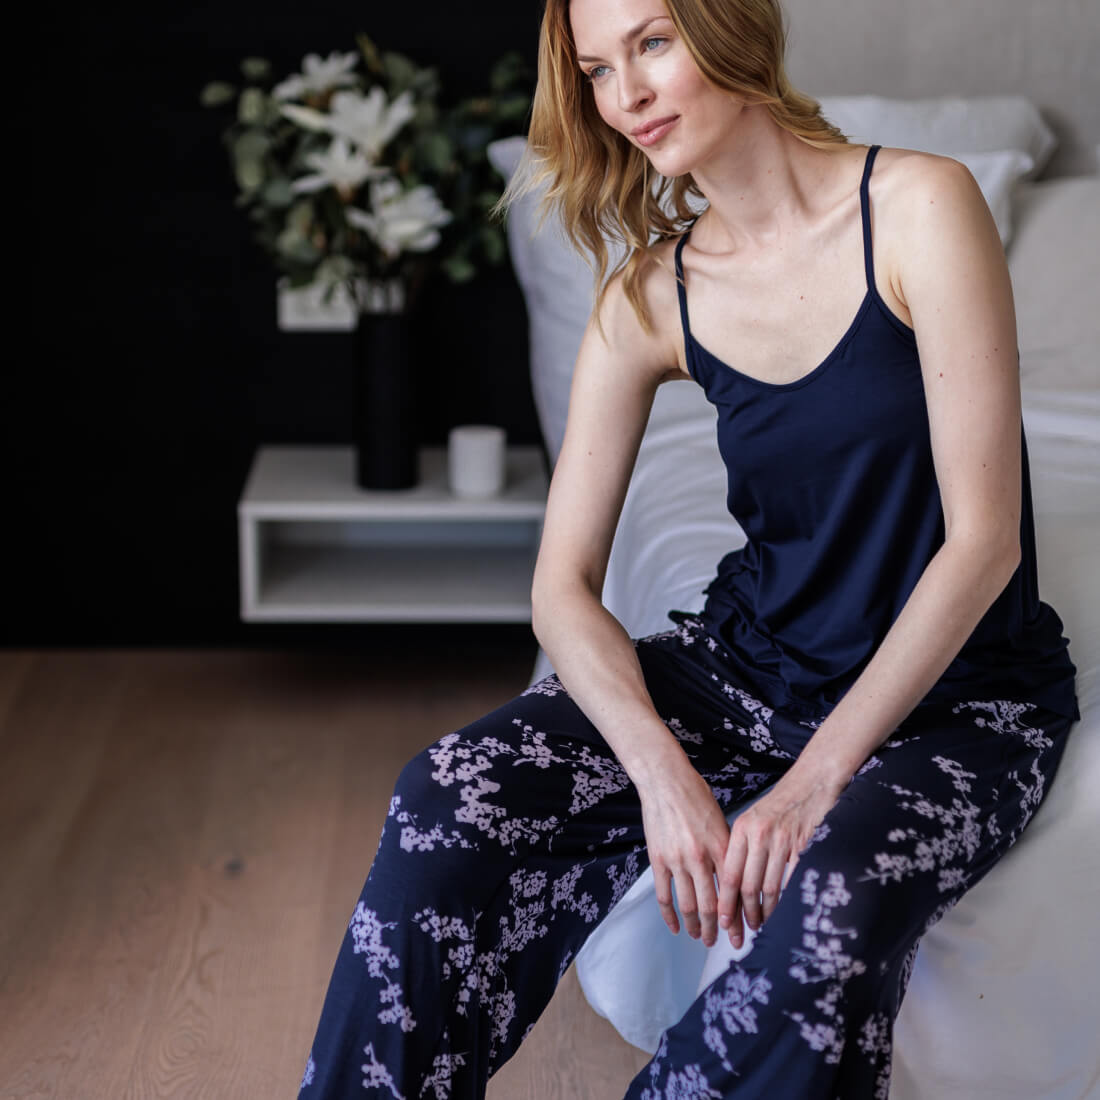 Women's cooling pajamas pants || Cherry blossom